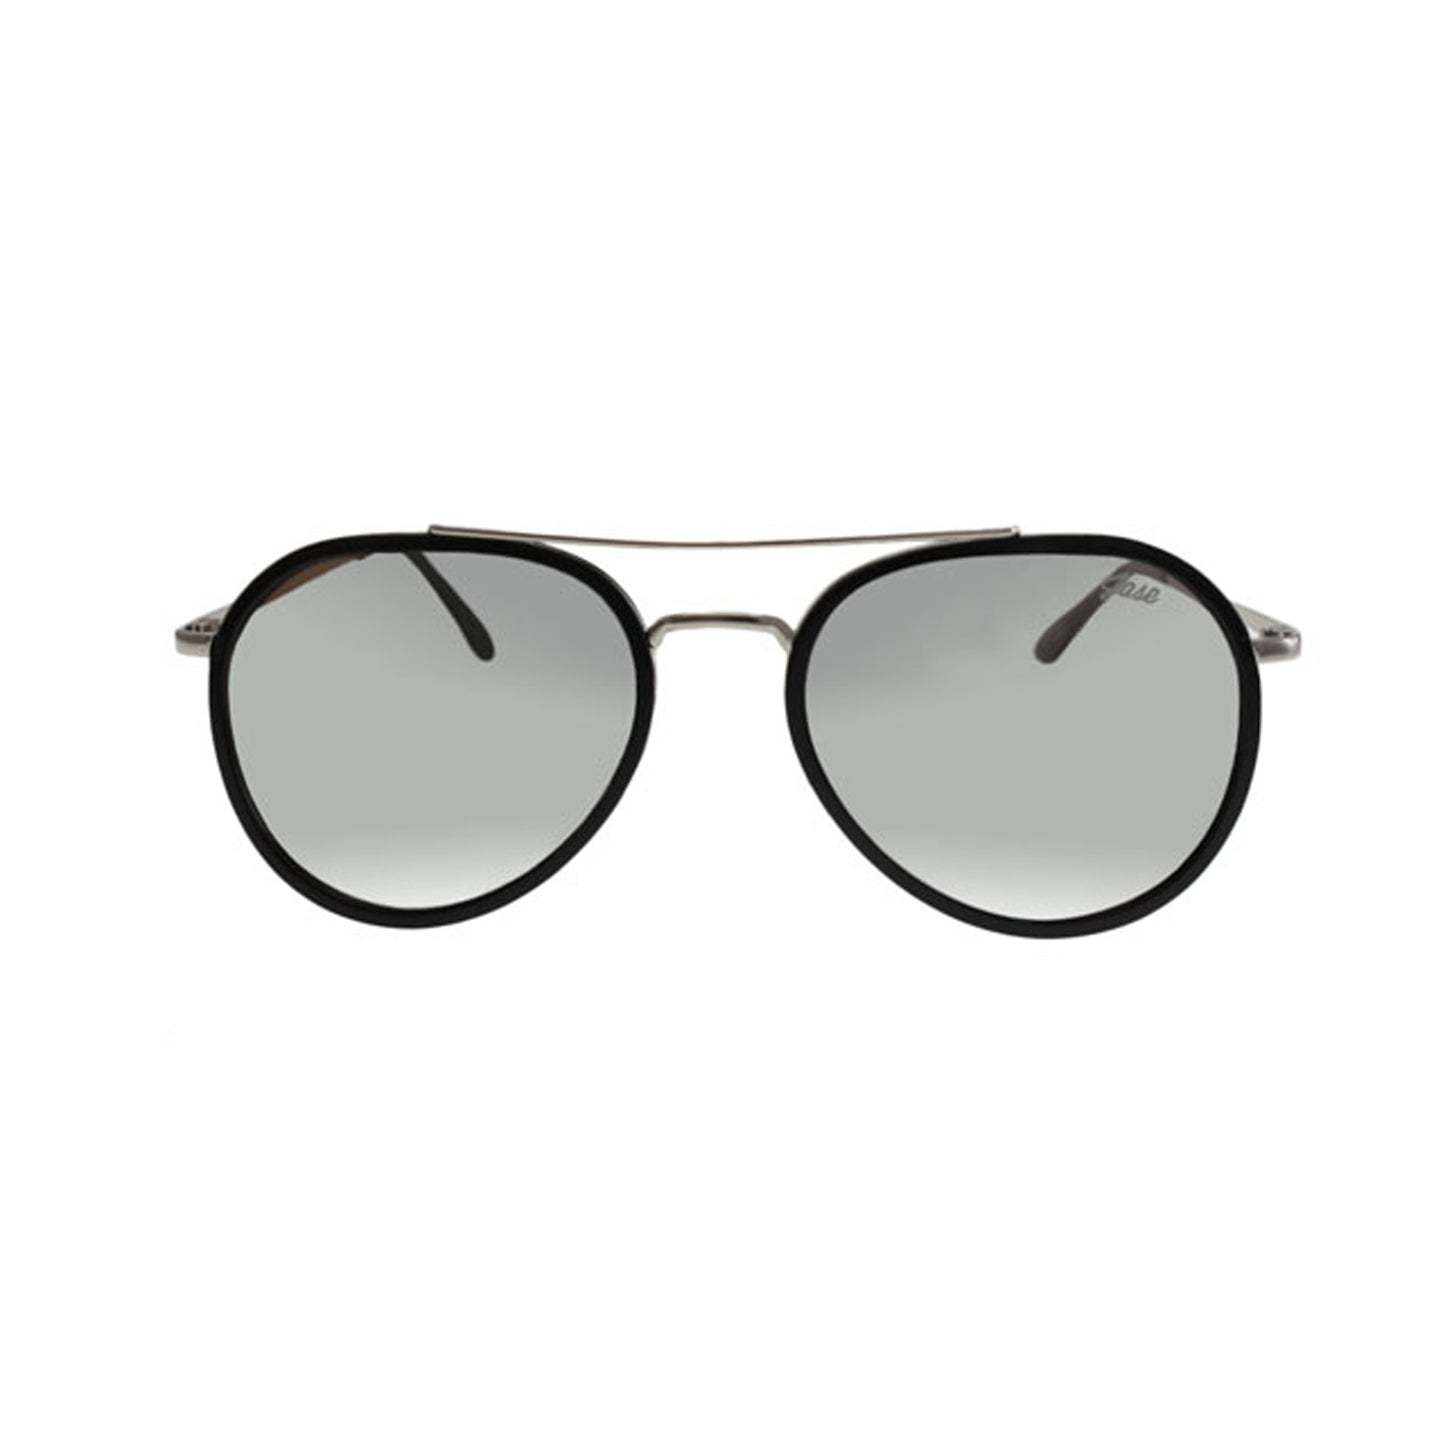 Jase New York Stark Sunglasses in Silver